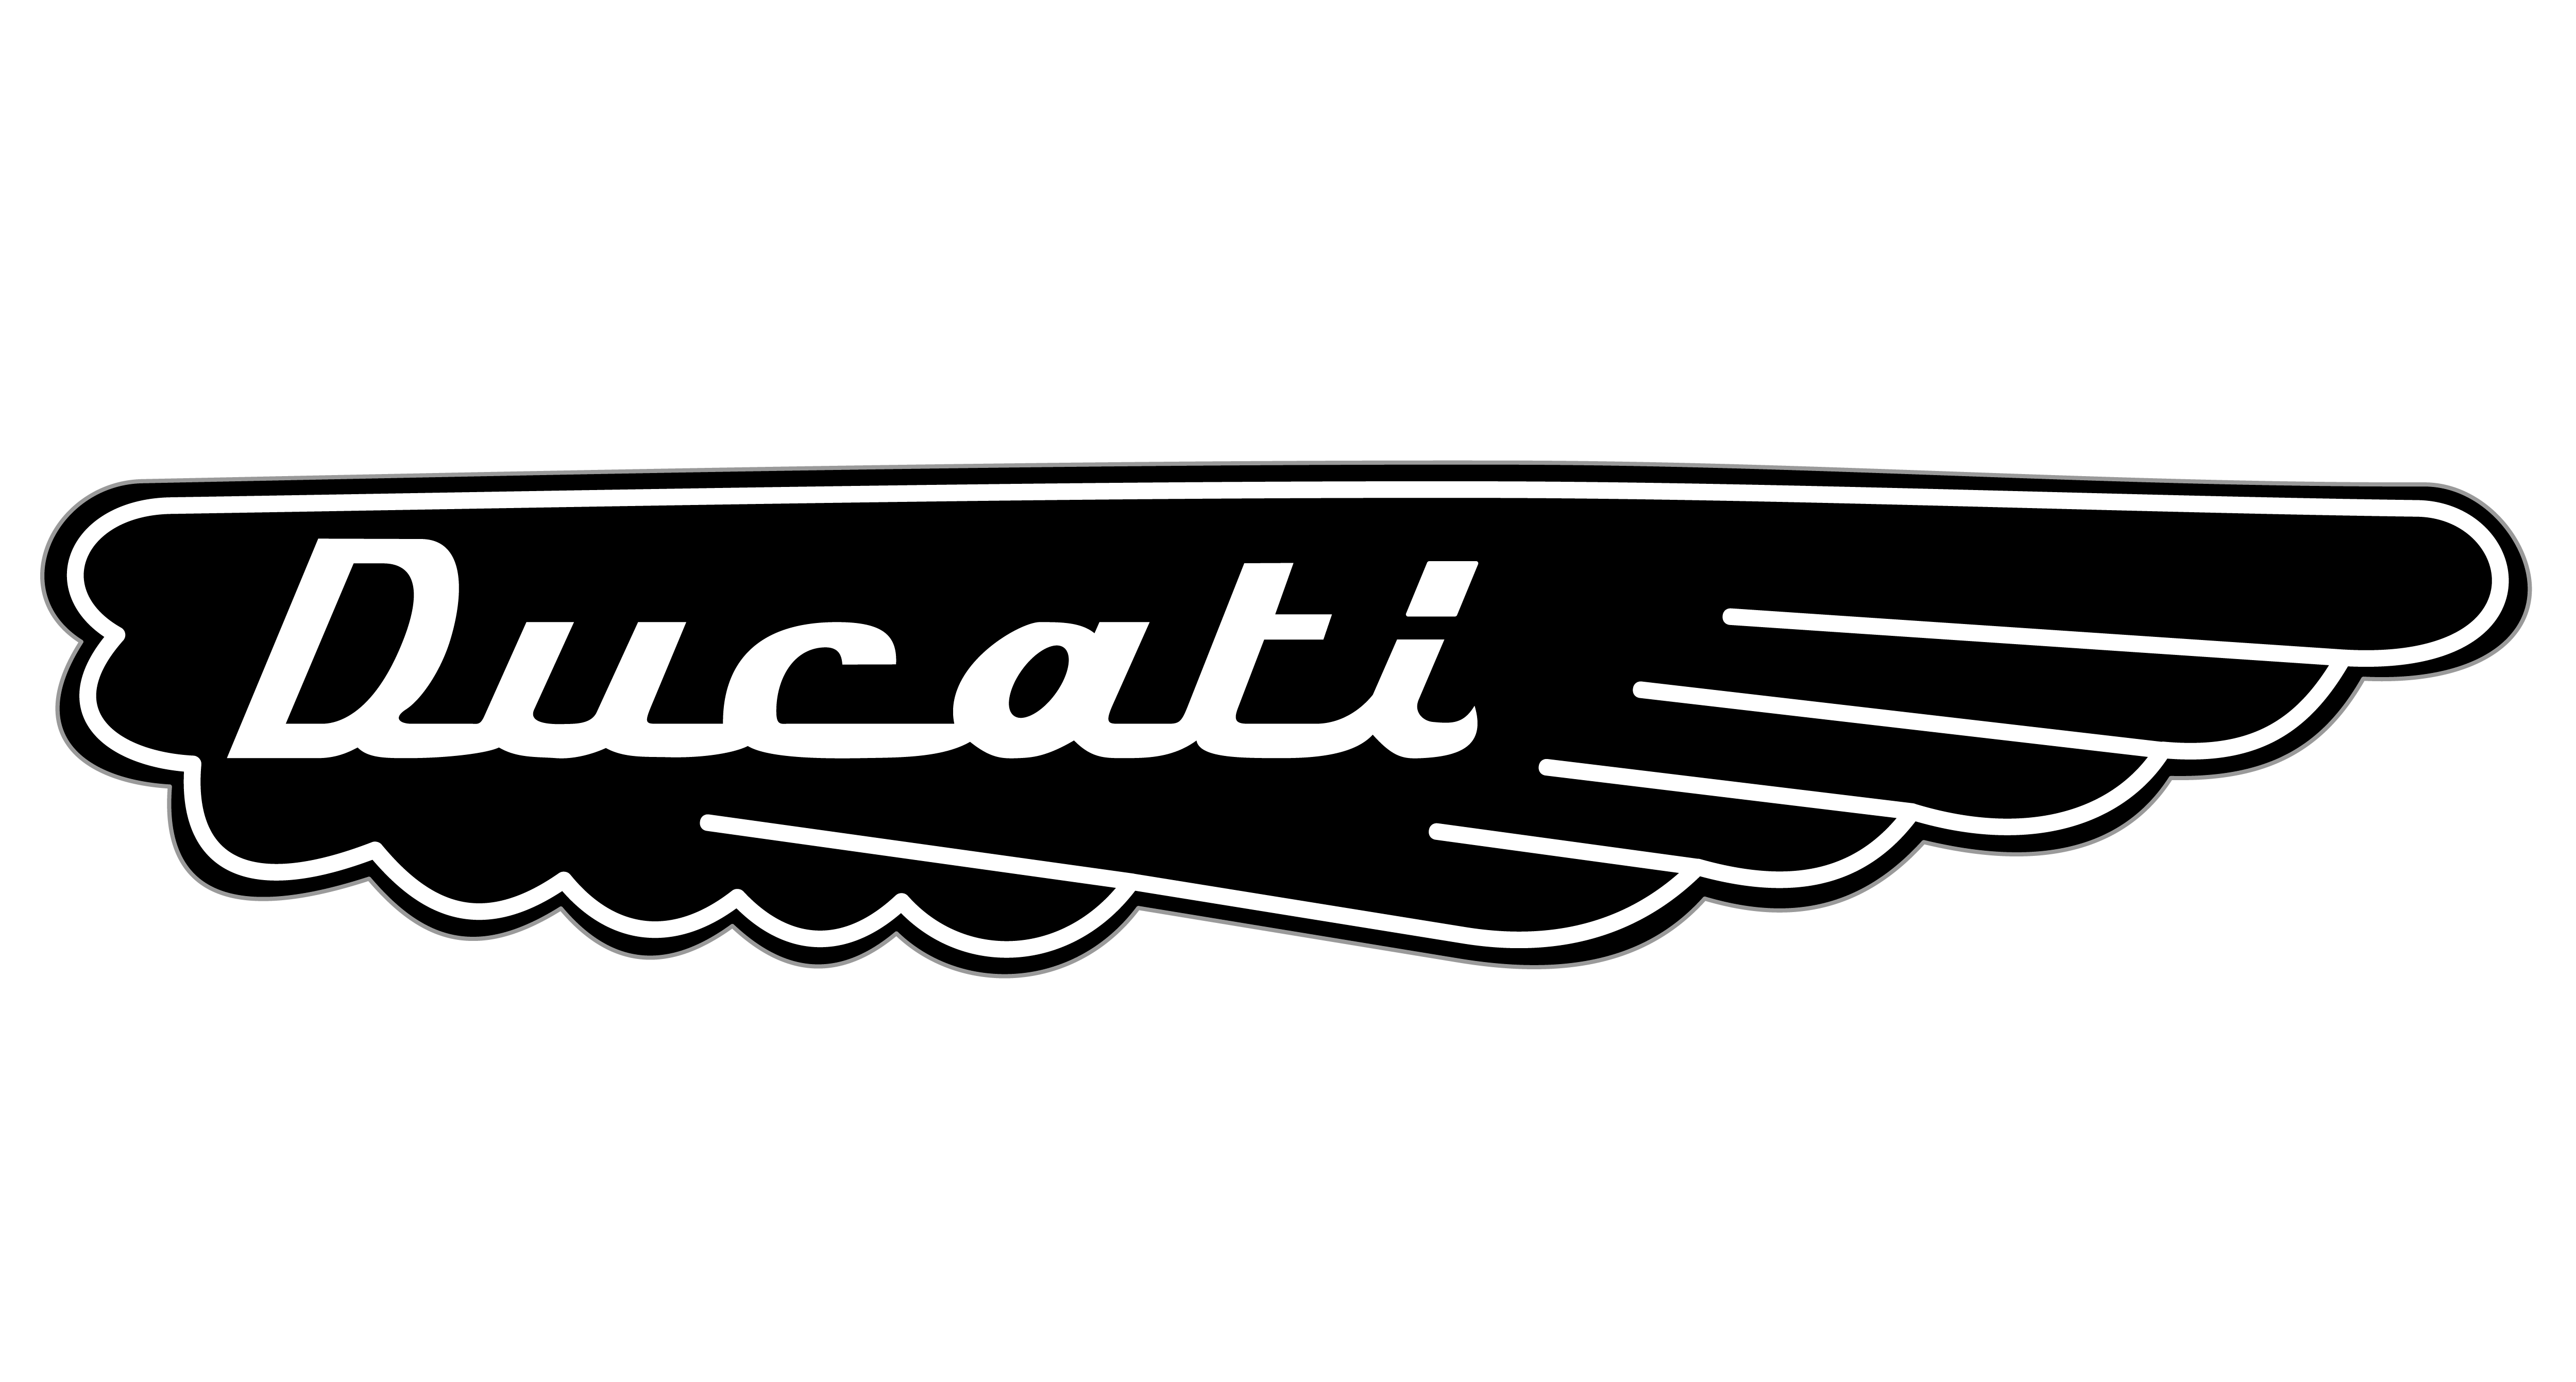 Ducati Logo - Ducati Logo 1967. Motorcycle Logos. Ducati, Motorcycle